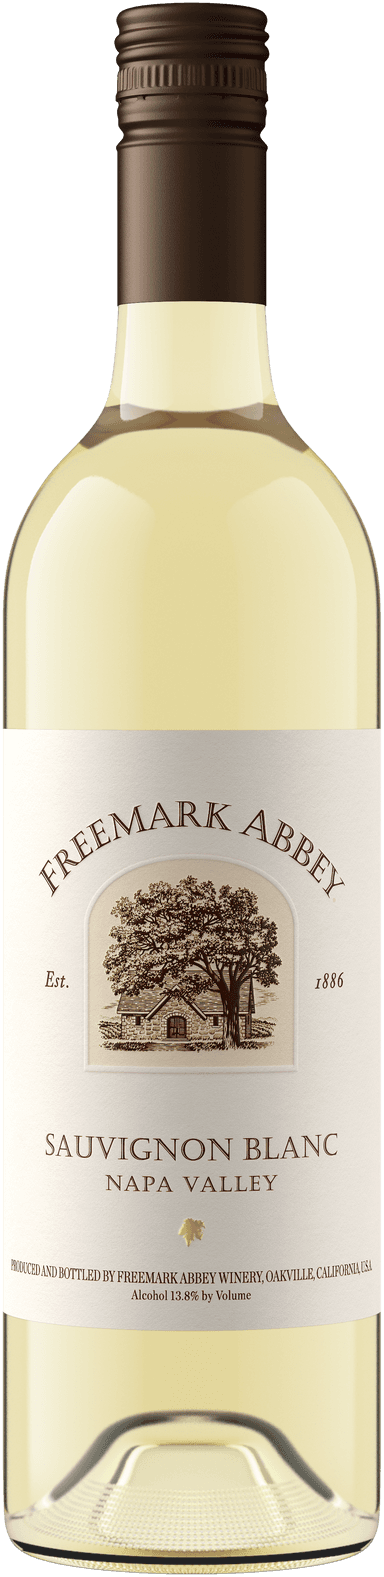 image-Freemark Abbey Winery Napa Valley Sauvignon Blanc